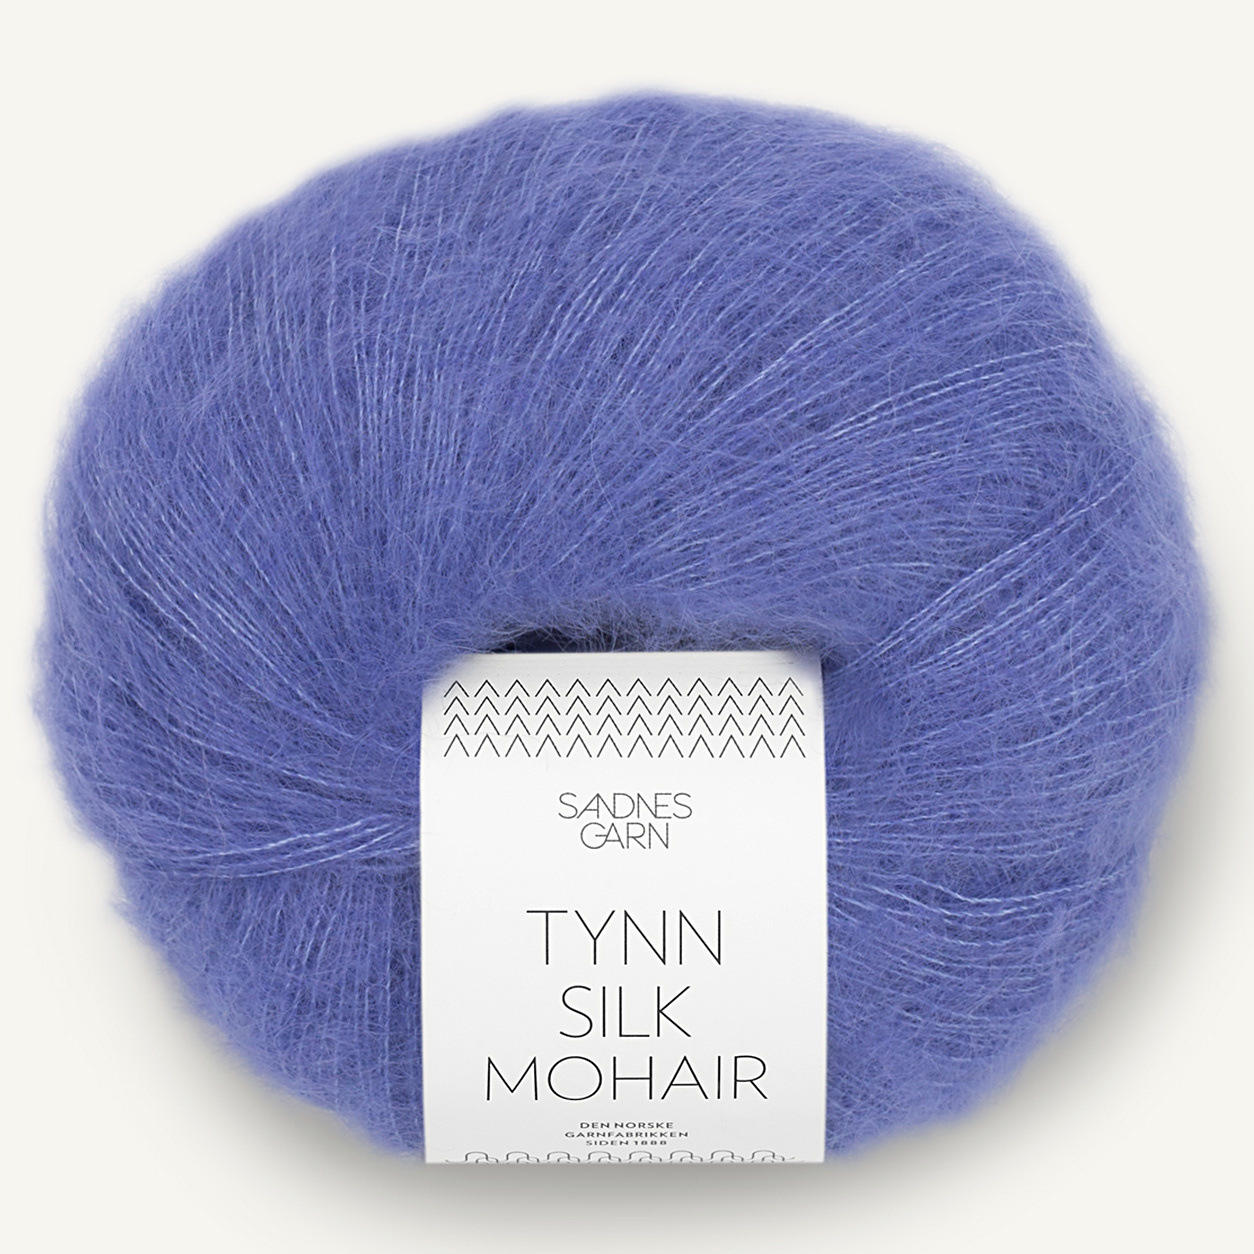 Sandnes Tynn Silk Mohair, 5535, Iris